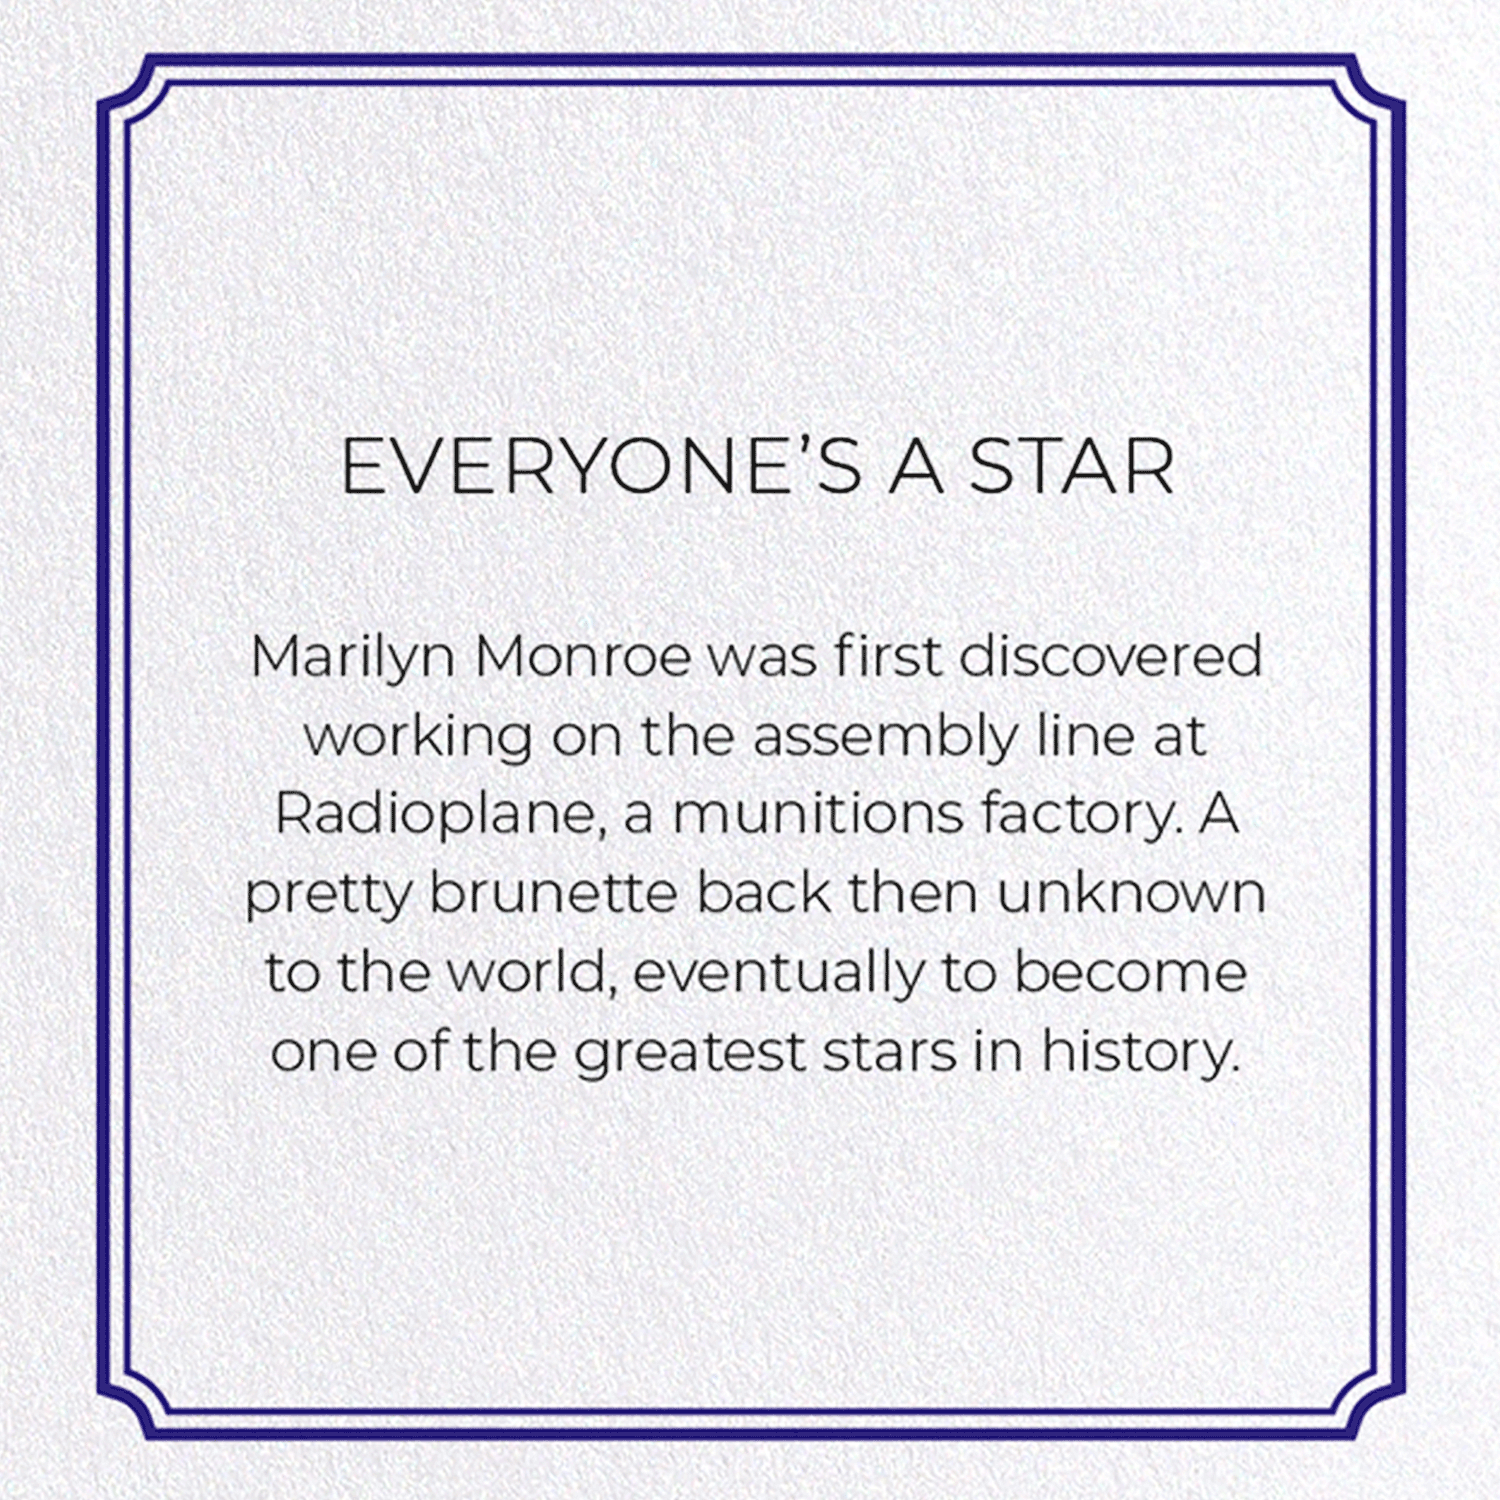 EVERYONE’S A STAR